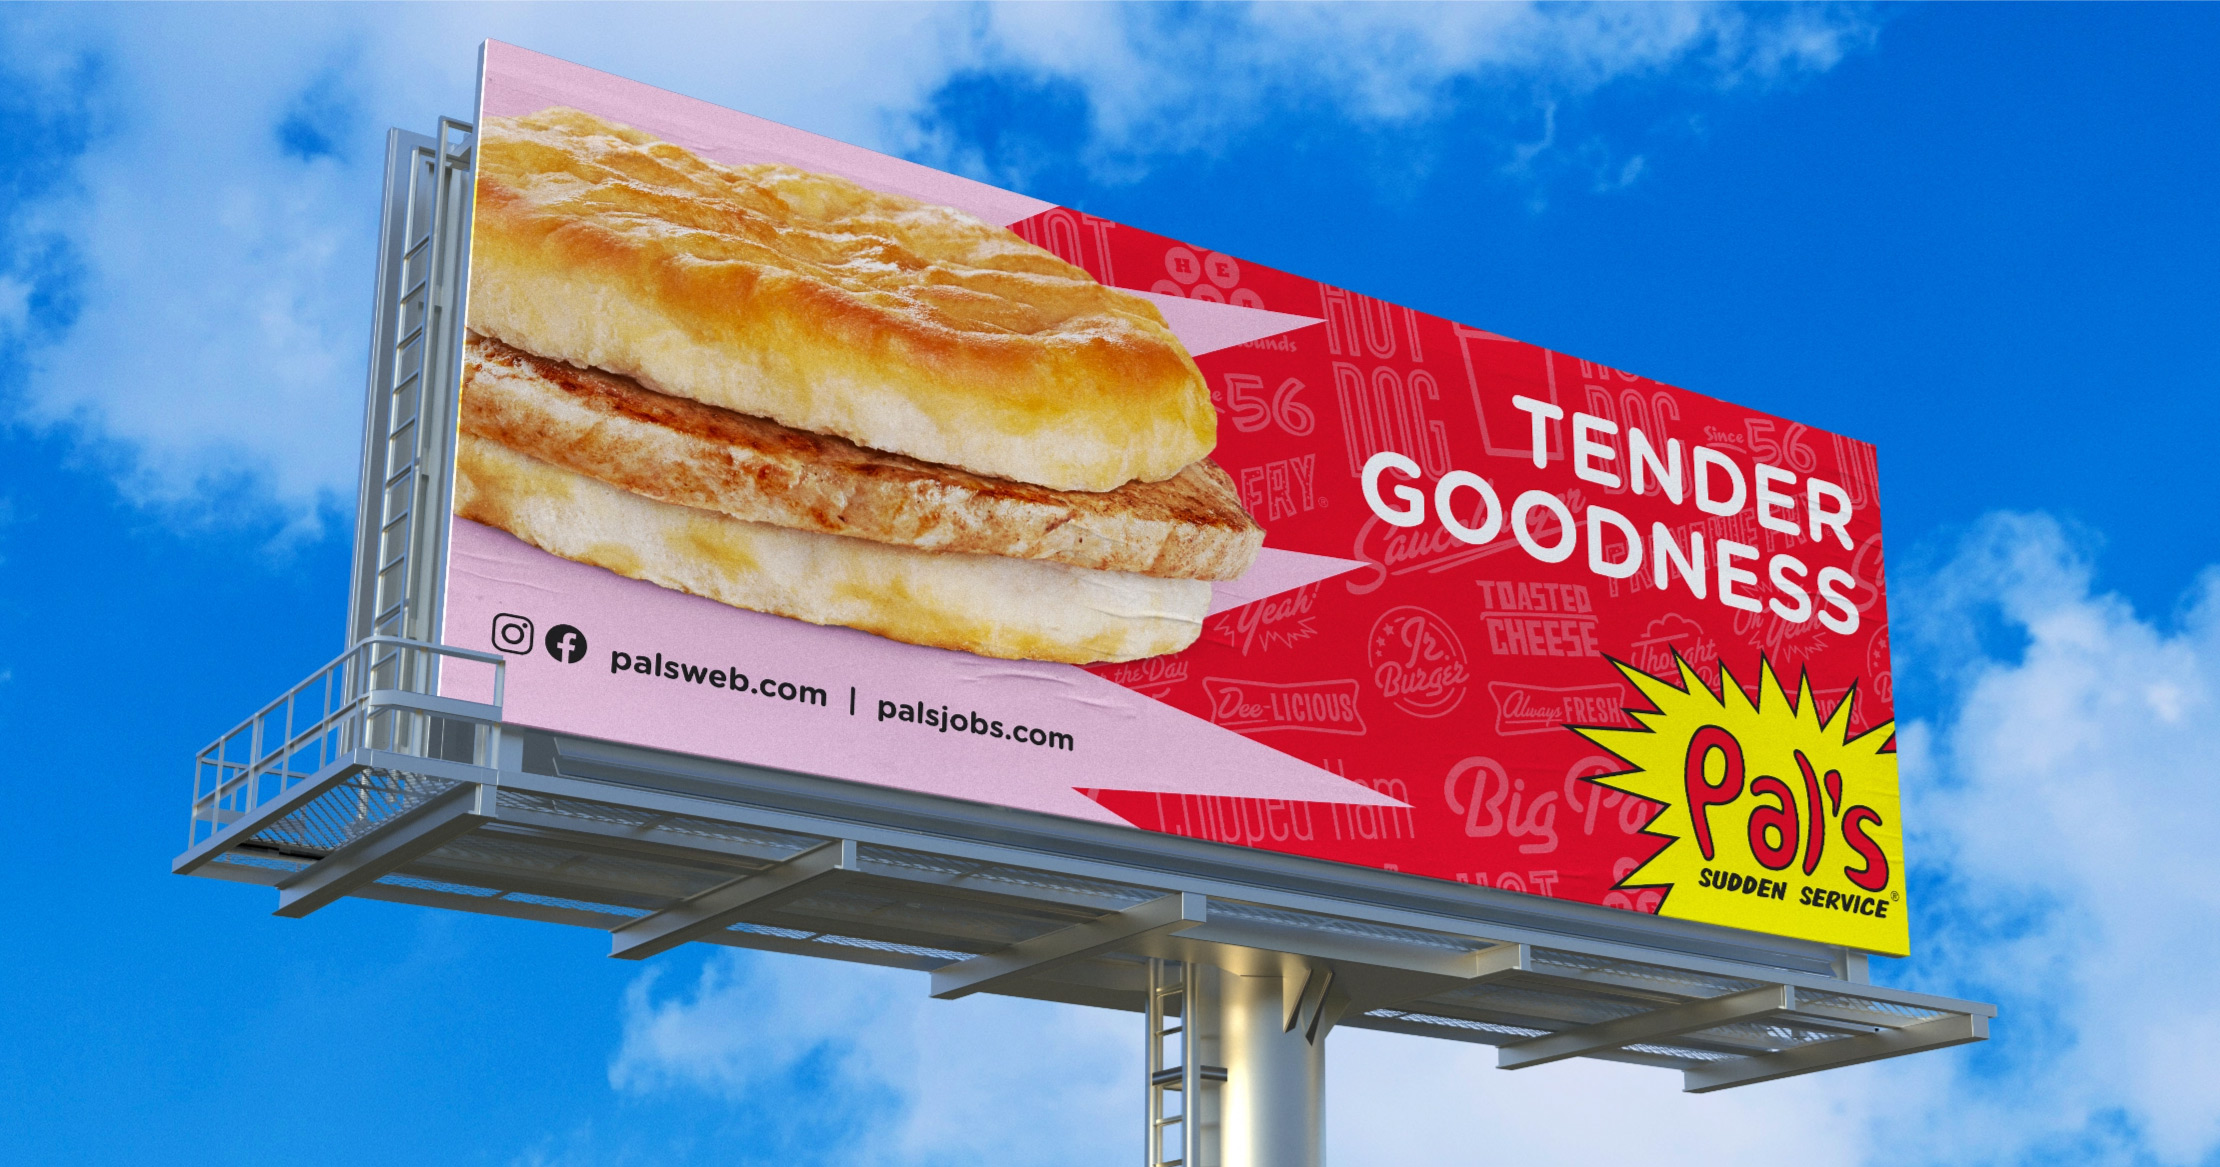 Creative Energy - Pal's Sudden Service - Tender Pork Loin Biscuit Billboard